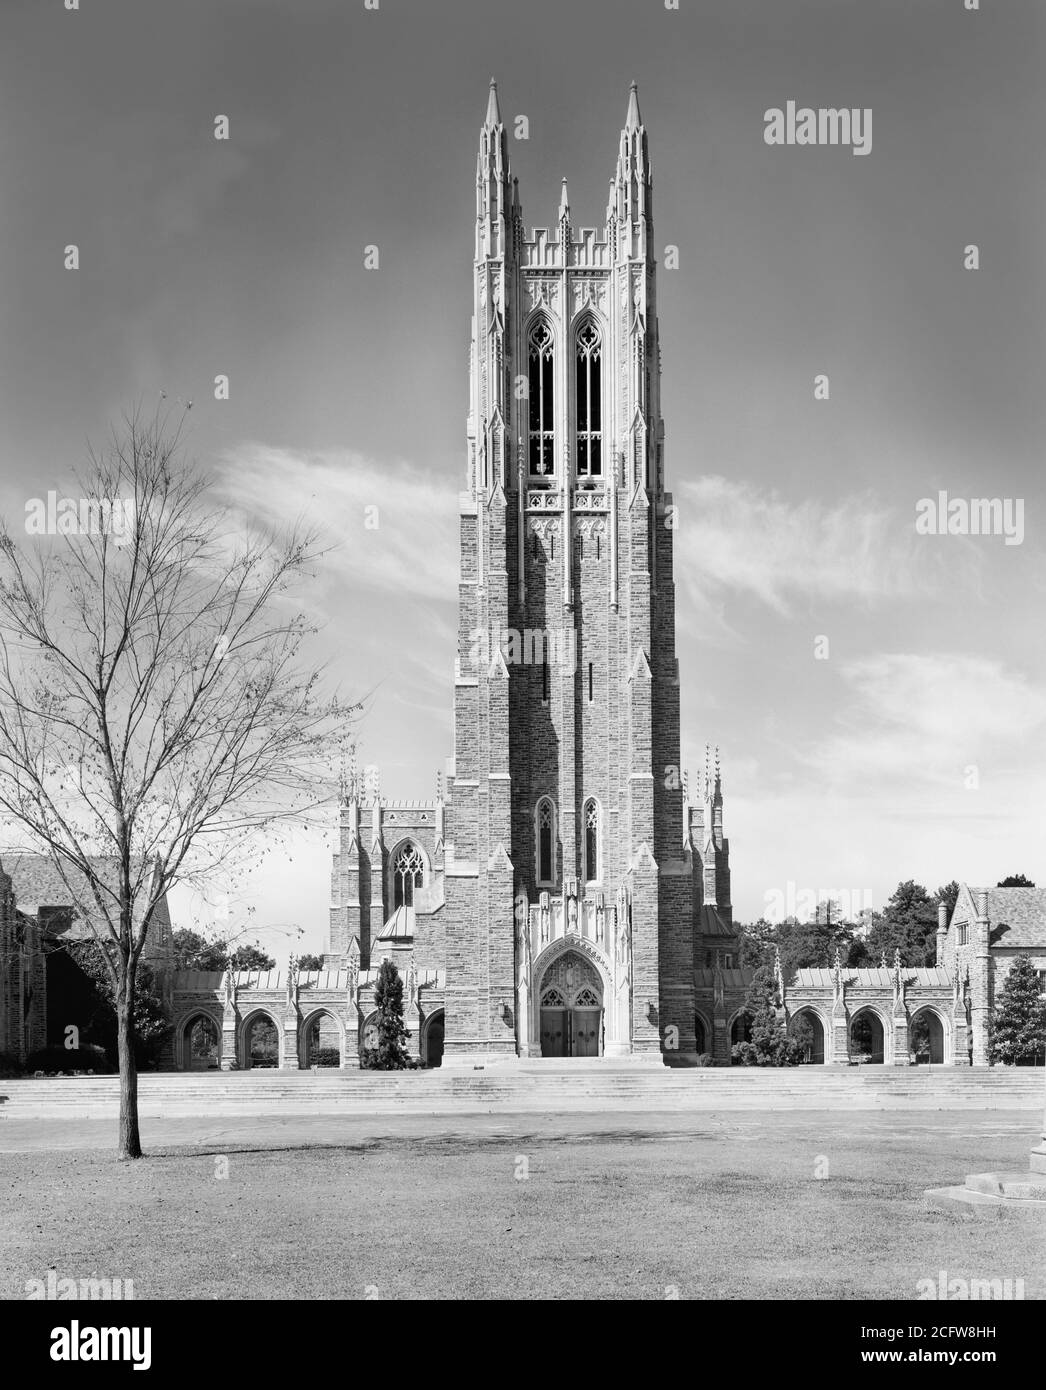 University Tower, Duke University, Durham, North Carolina, USA, Frances Benjamin Johnston, Carnegie Survey of the Architecture of the South, 1938 Stock Photo